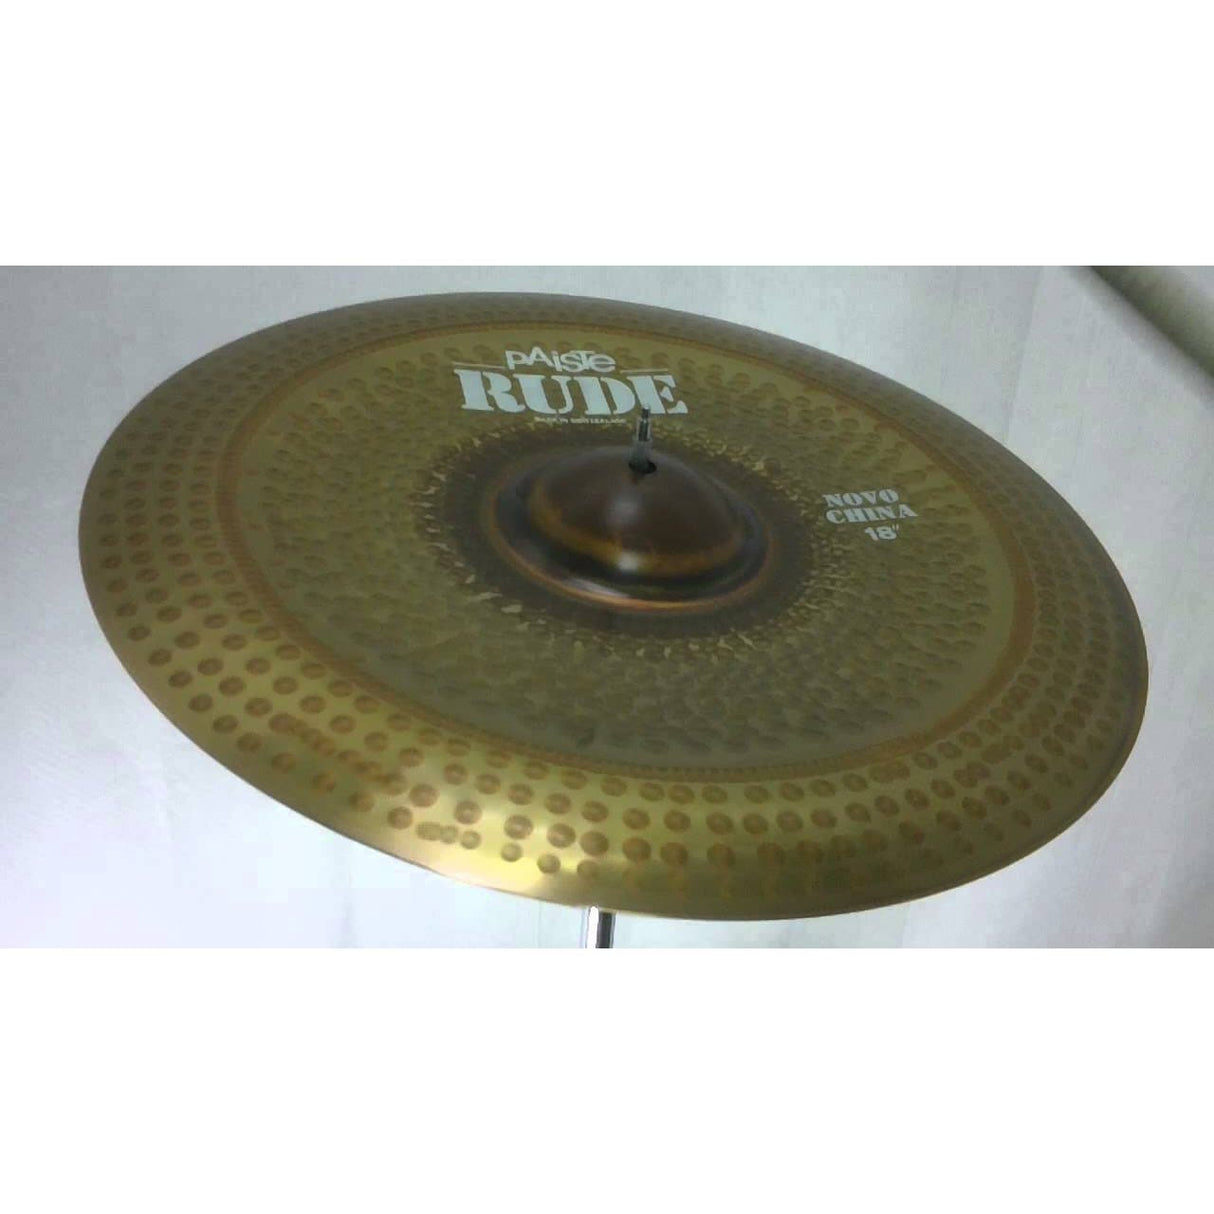 Paiste Rude Novo China Cymbal 18"